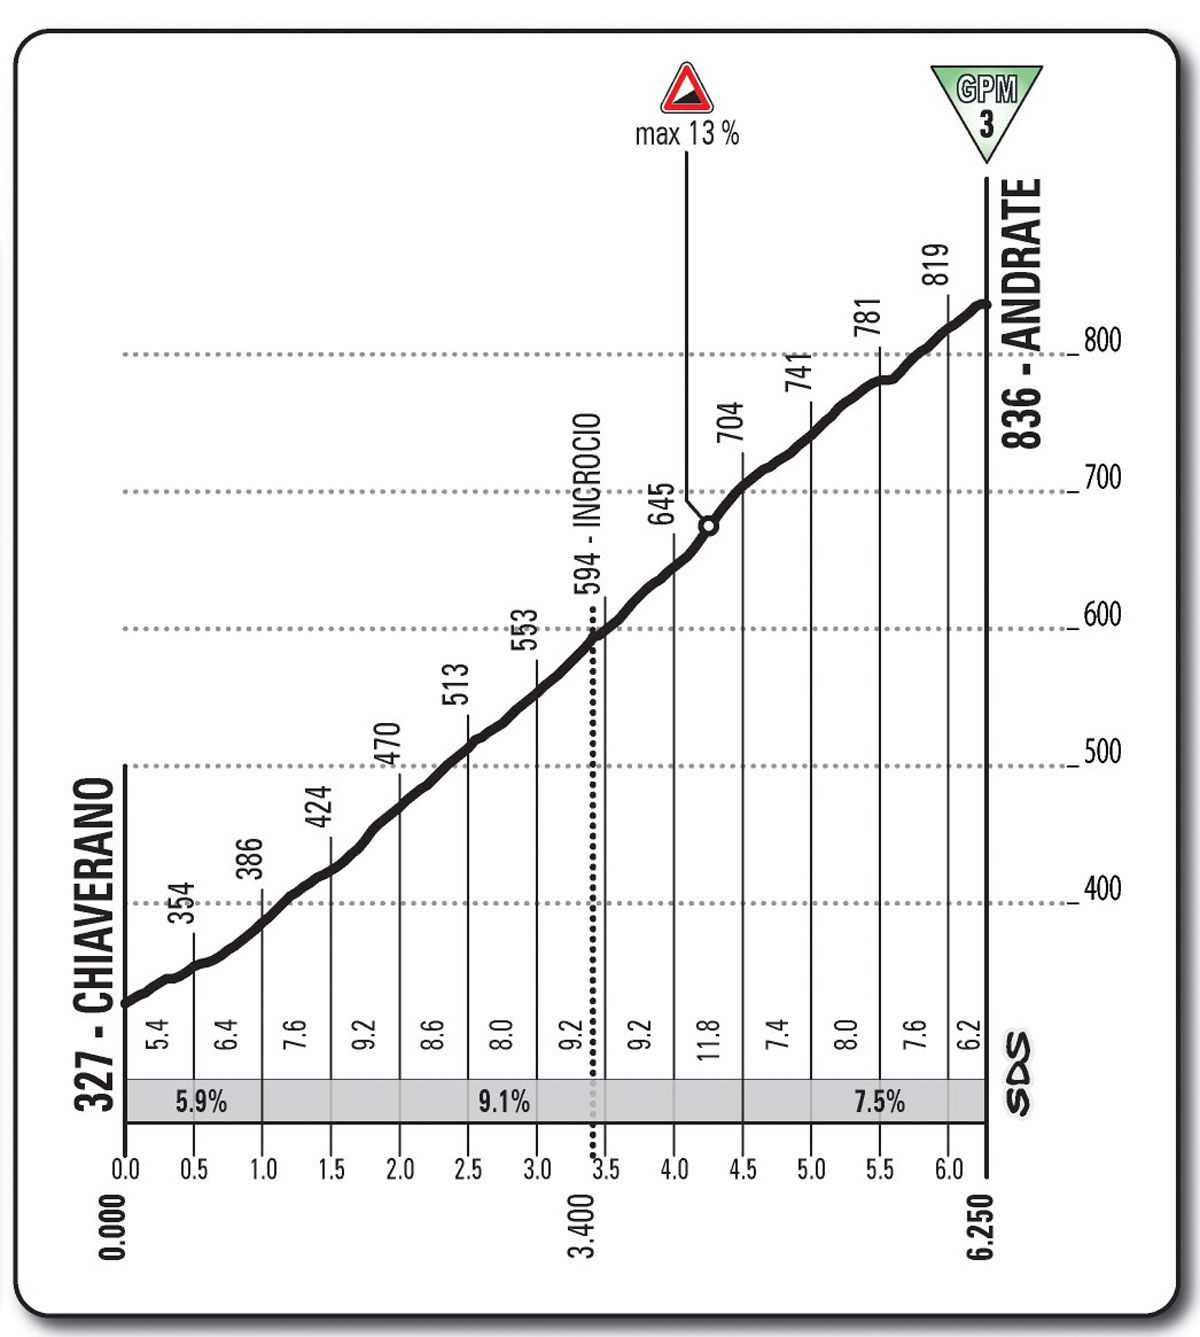 Giro d'Italia 2013 stage 16, Andrate profile